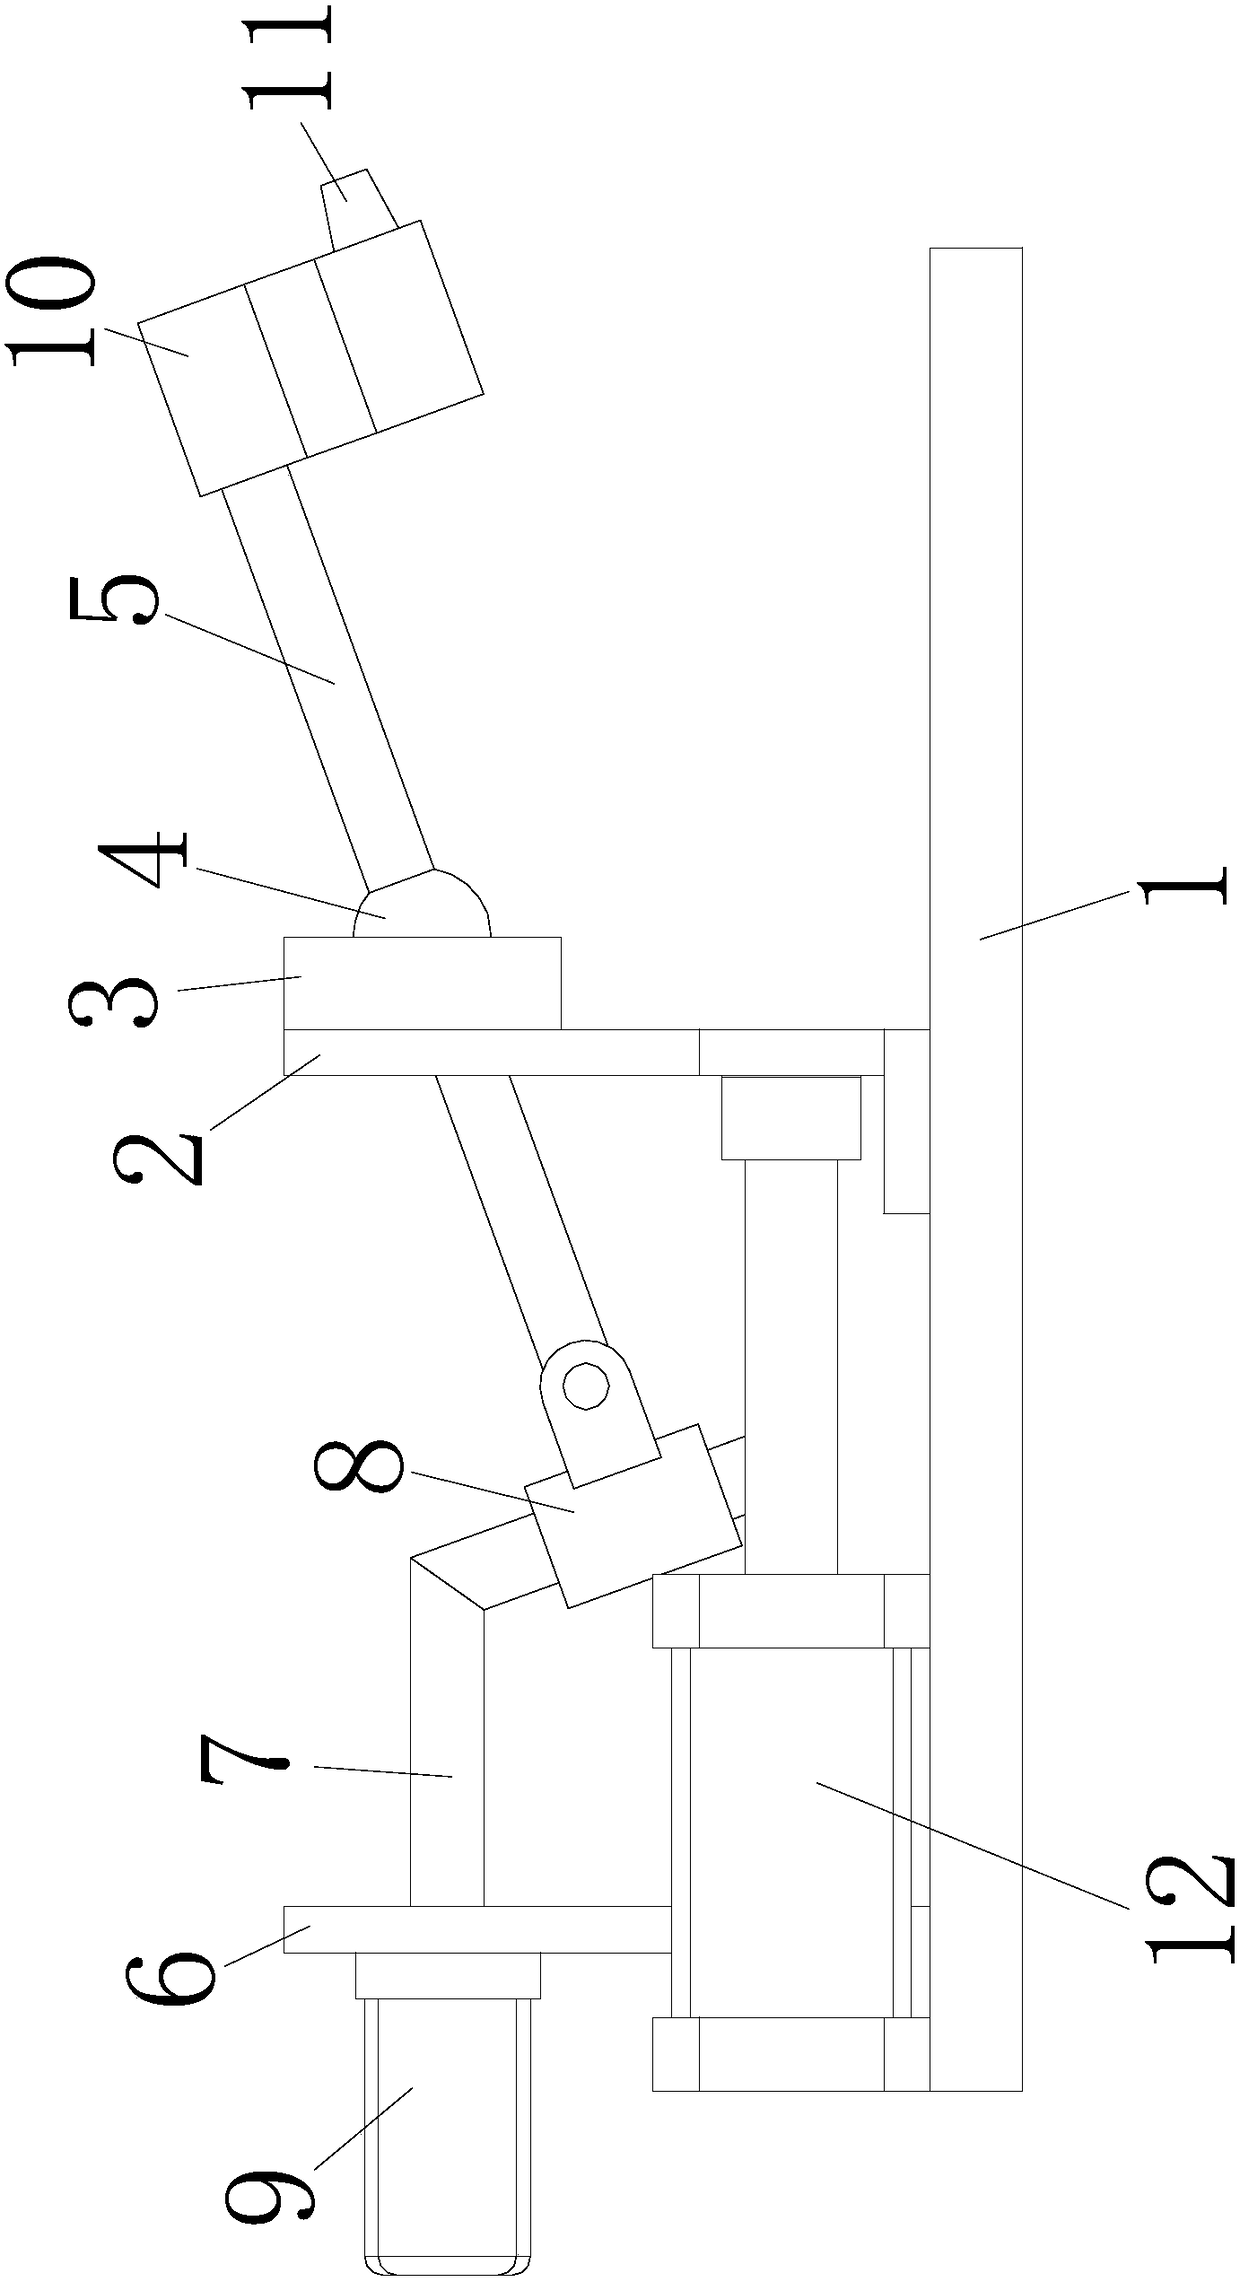 A rotary spraying device